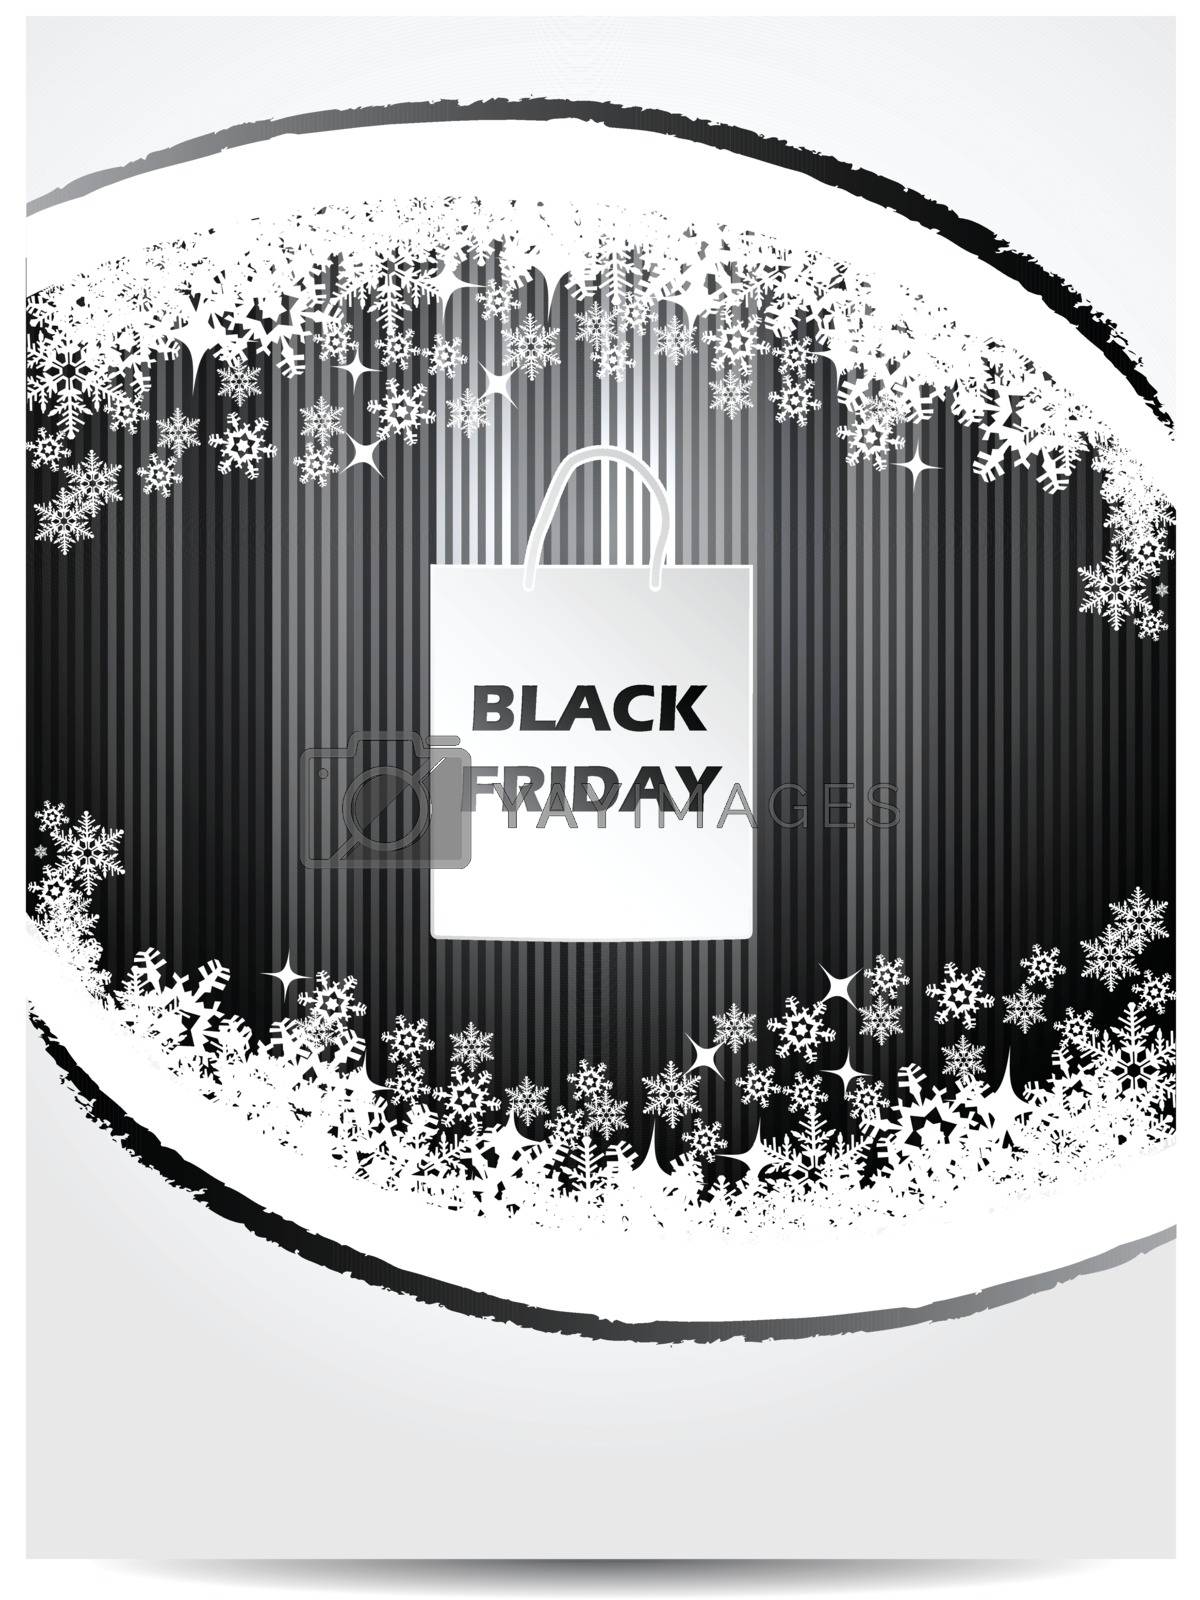 Royalty free image of Black friday advertising shopping bag theme by vipervxw